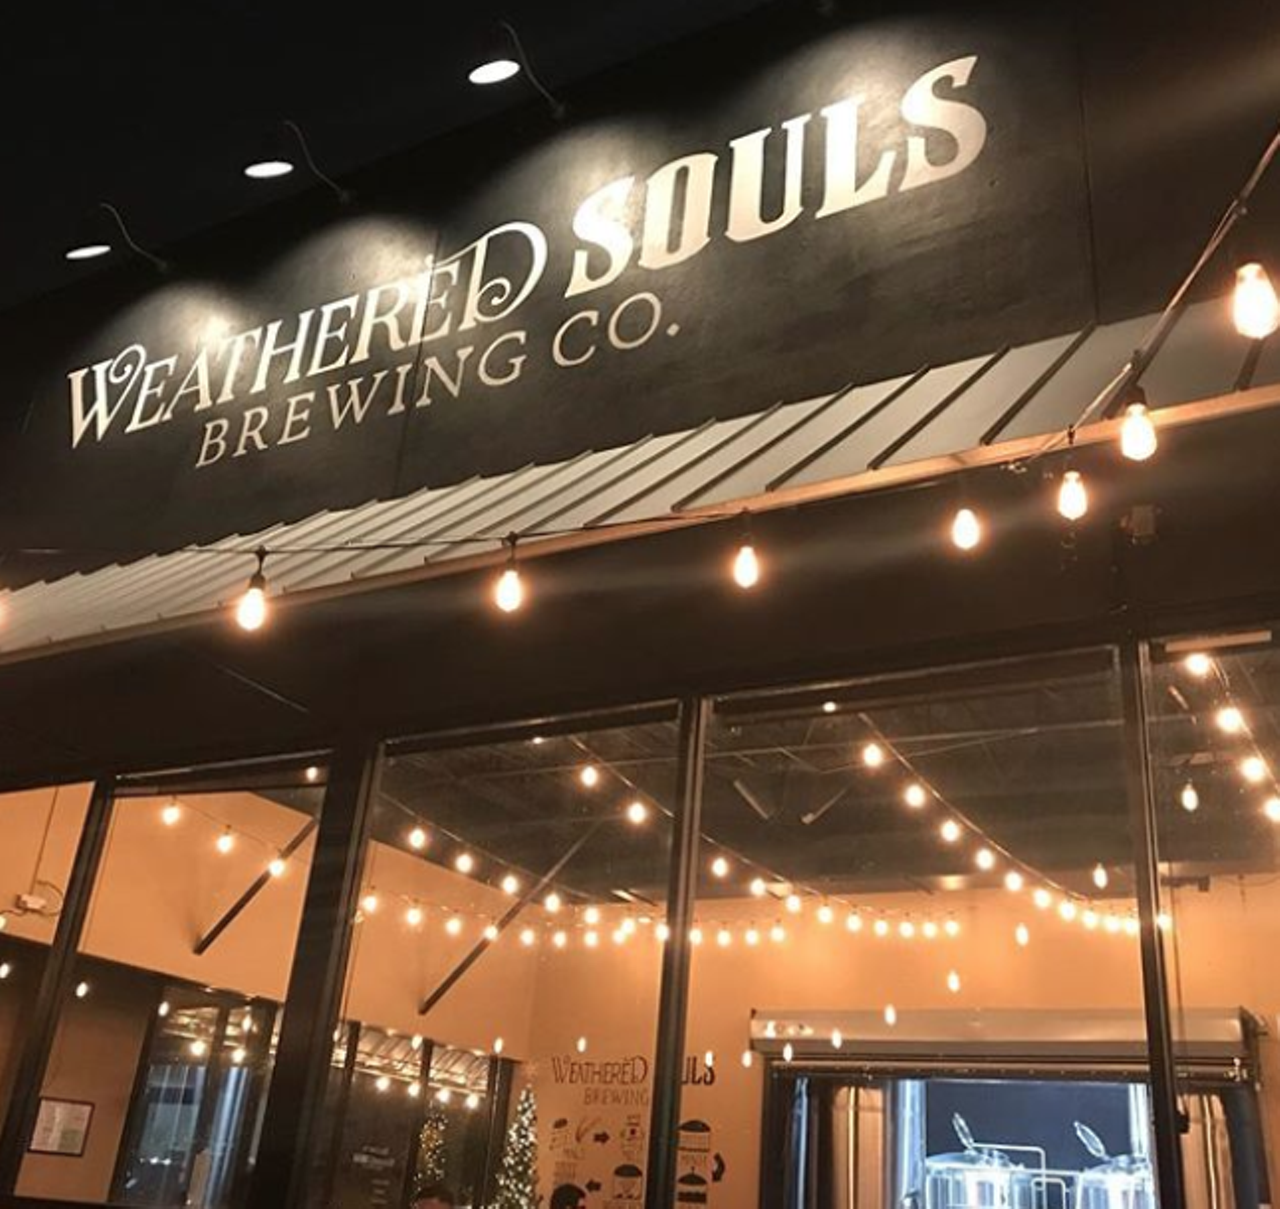 Weathered Souls Brewing Co.
606 Embassy Oaks, Suite 500, (210) 313-8796, weatheredsouls.beer
Photo via Instagram / emima03